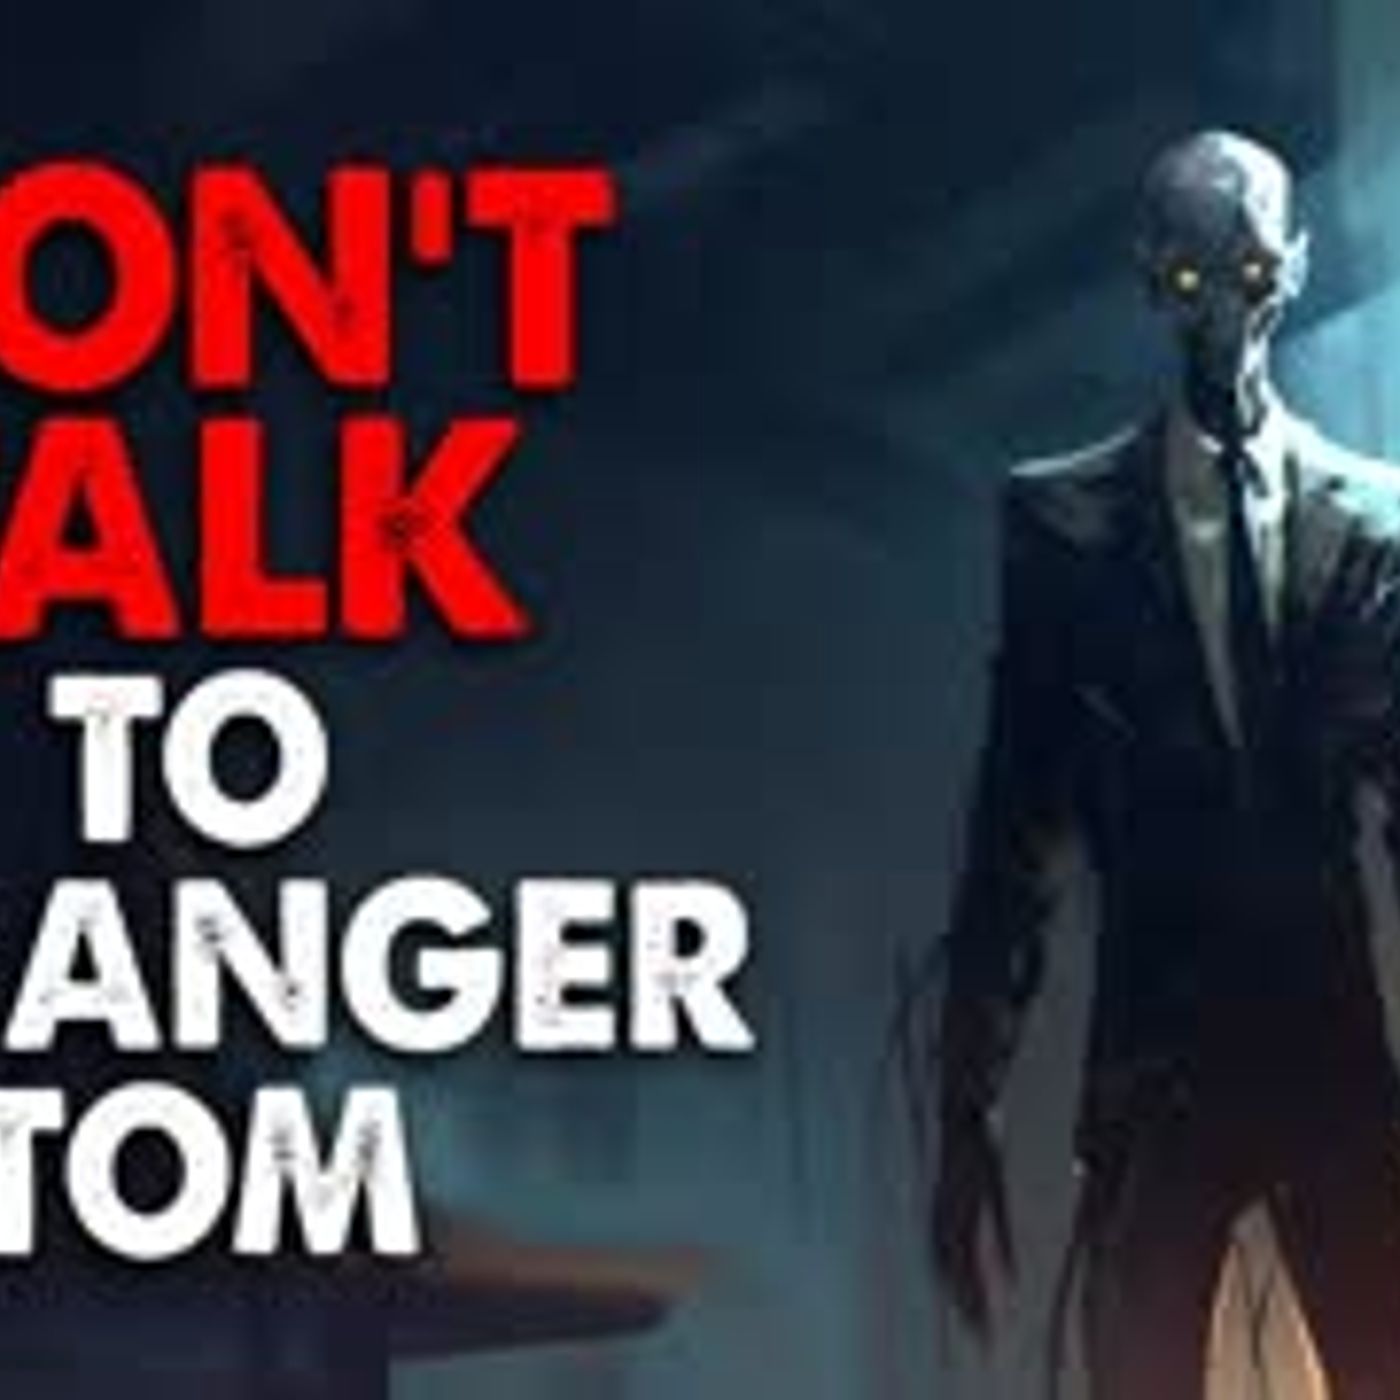 ”Don’t talk to Stranger Tom” Creepypasta